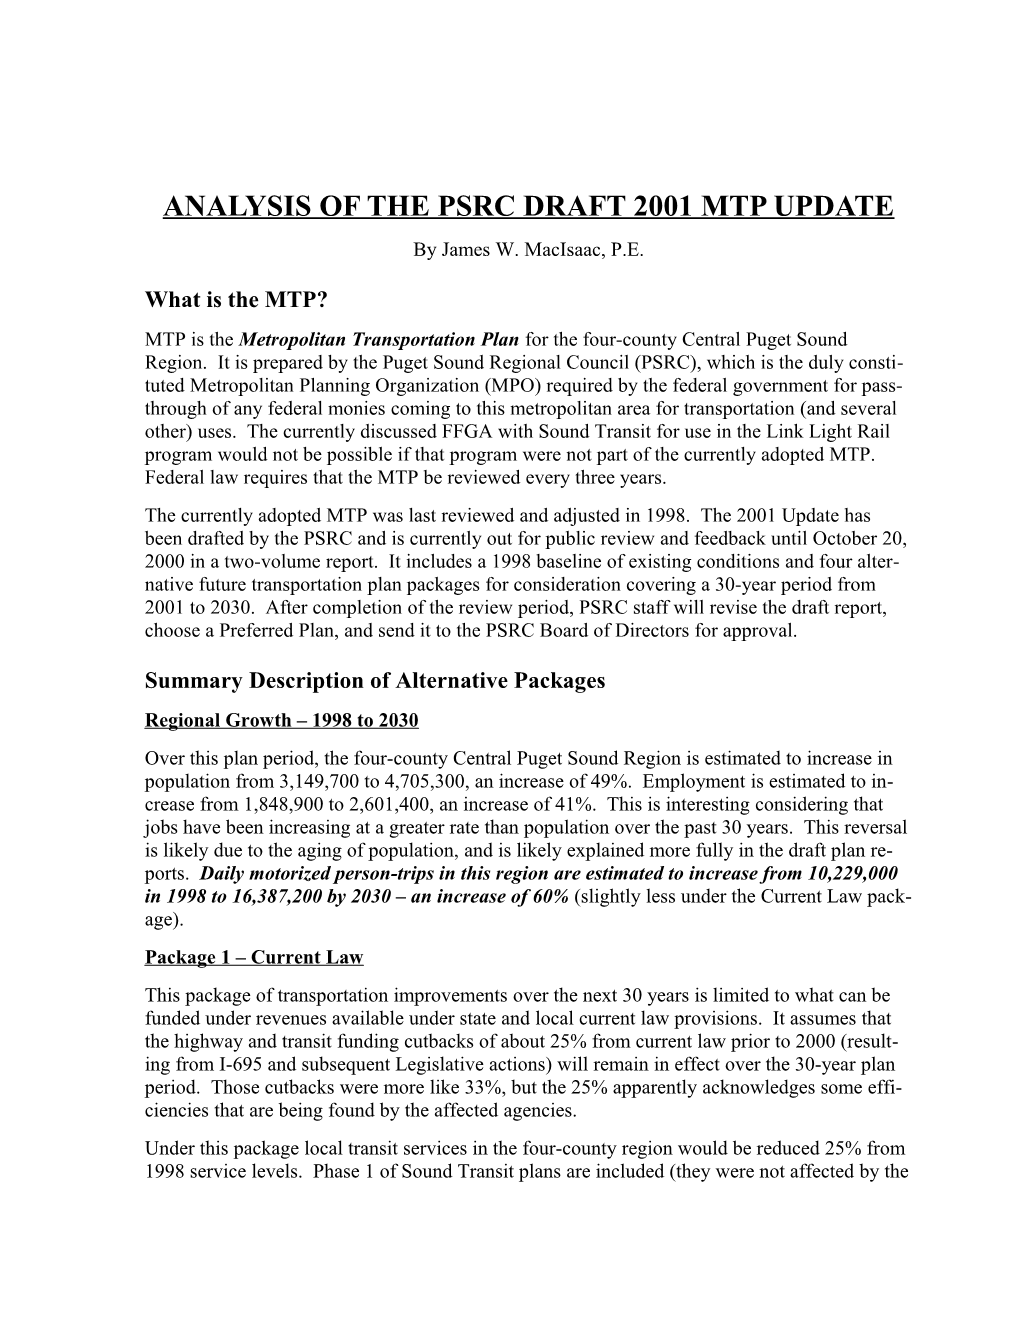 Analysis of the Psrc Draft 2001 Mtp Update